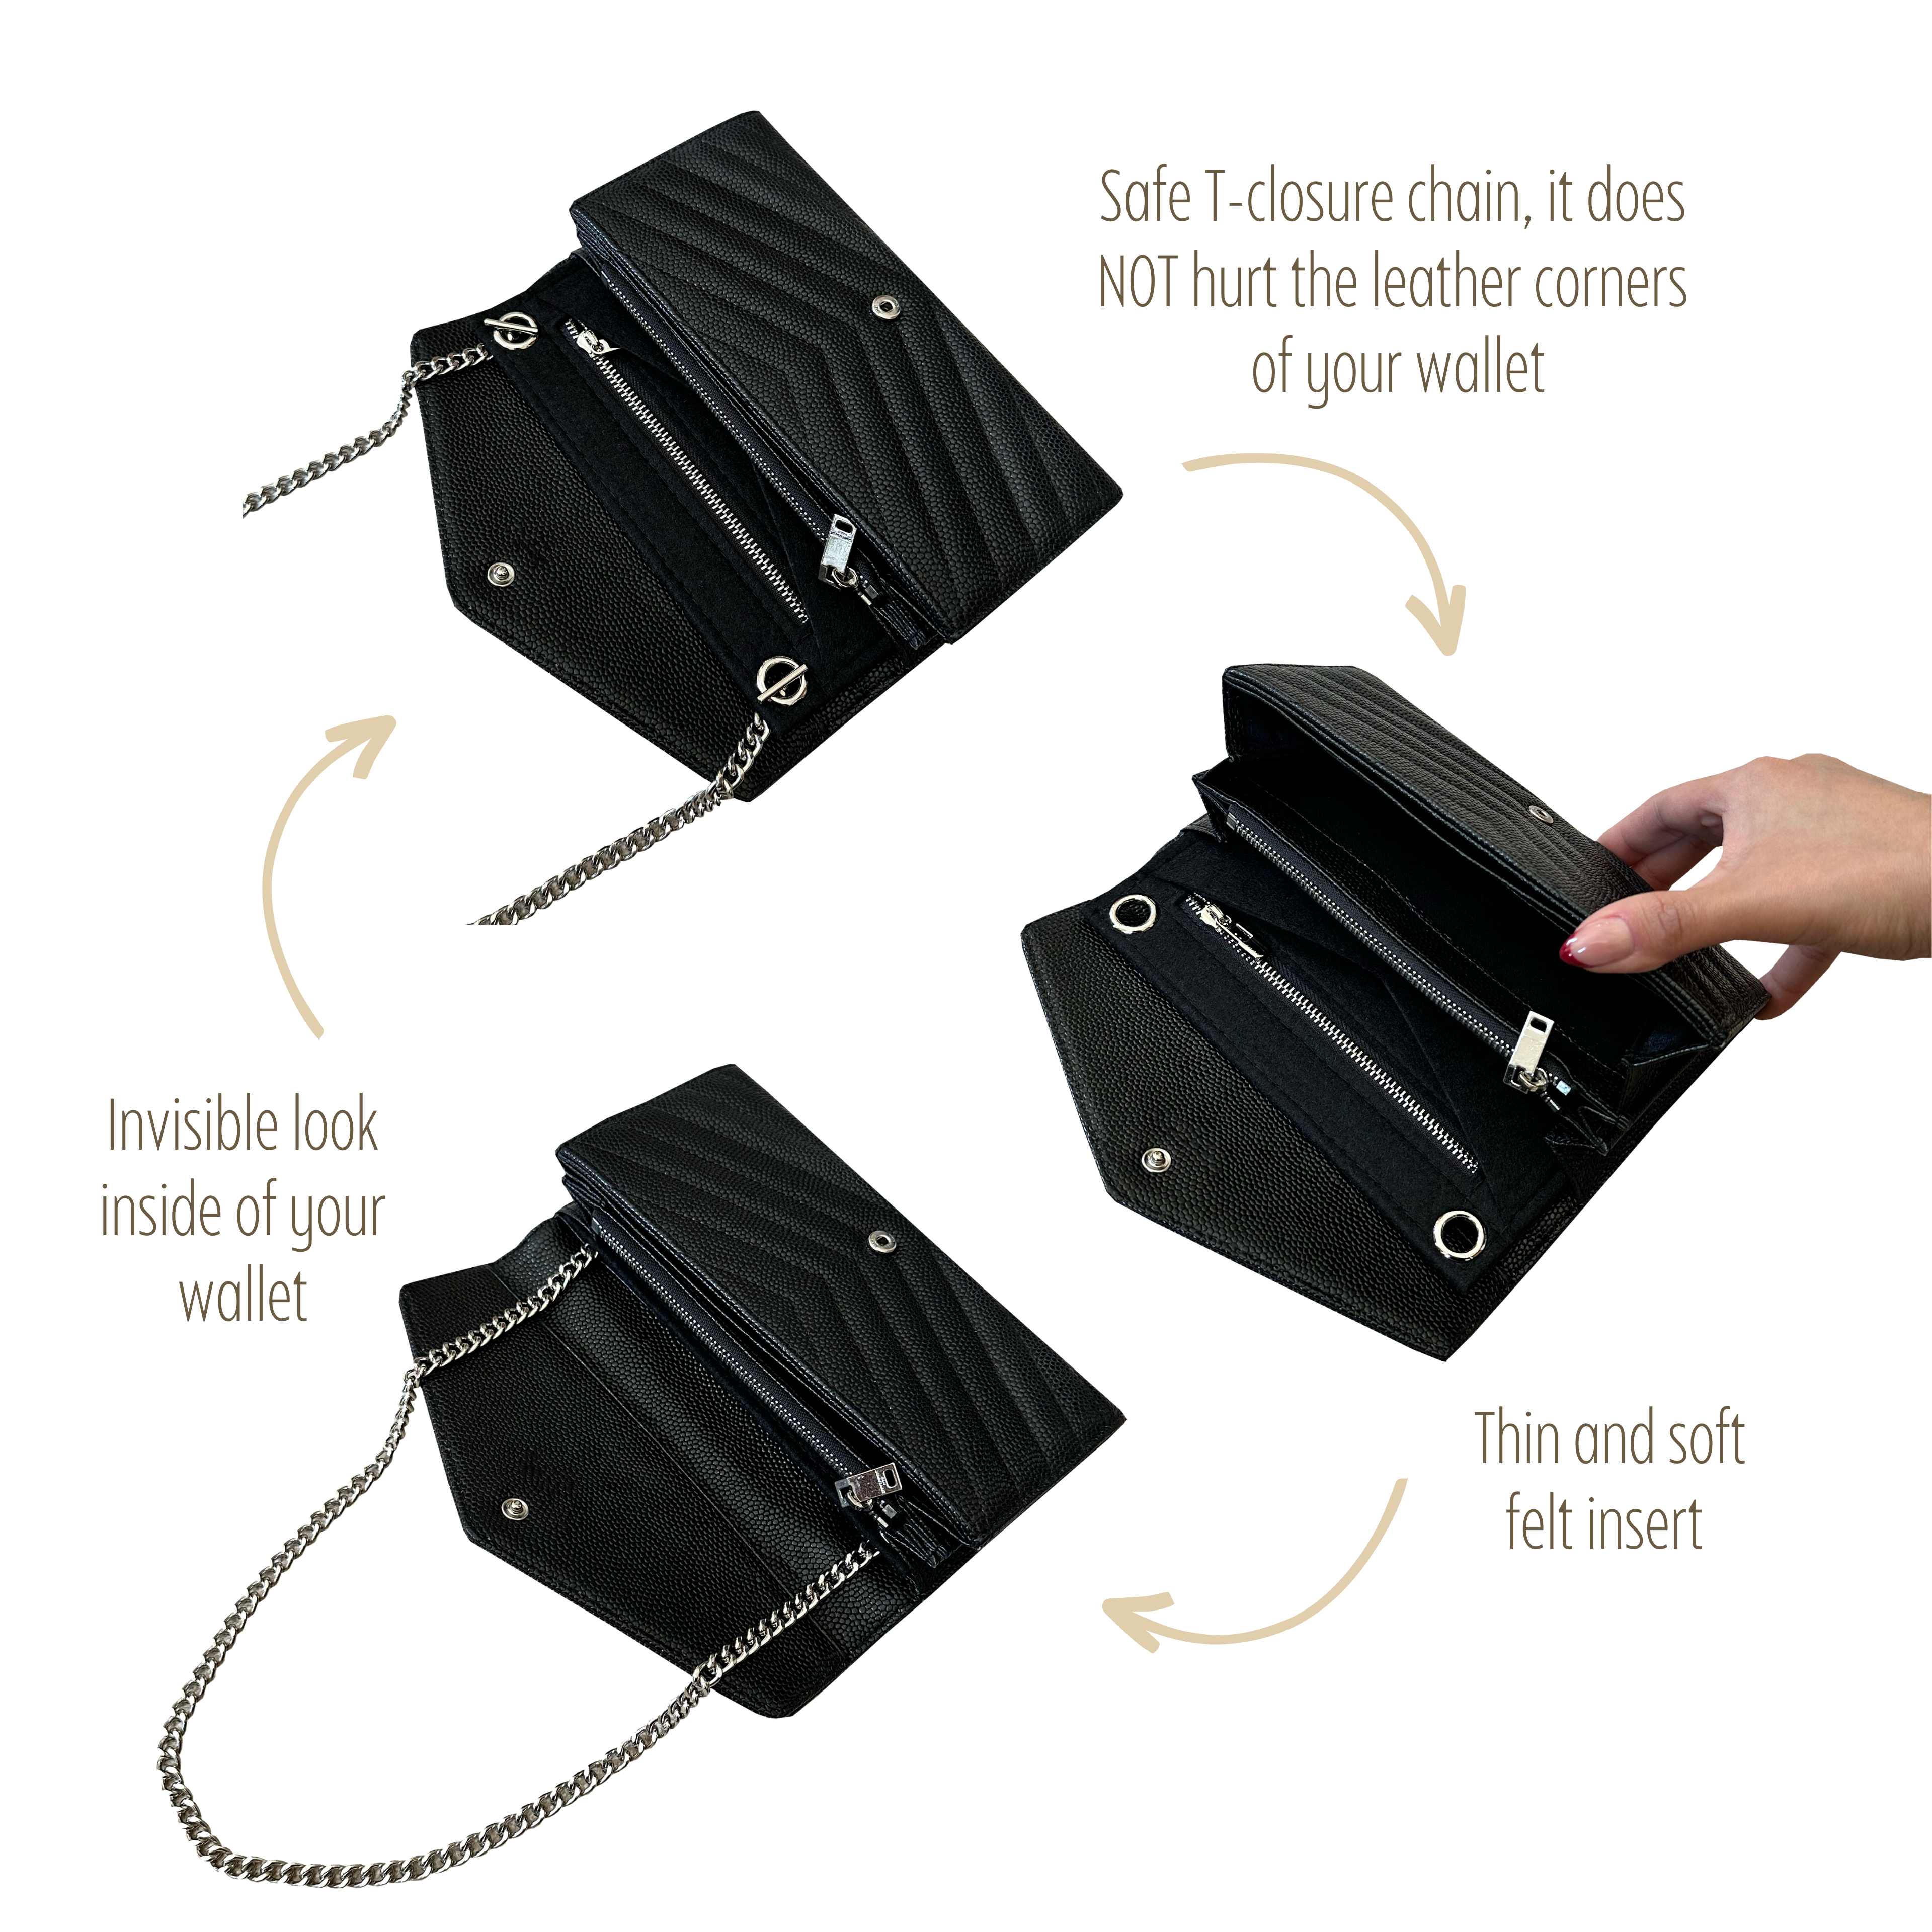 Conversion Kit for Cassandre Large Flap Wallet | Accessory for YSL Swing | Chanel Strap | Designer Purse Insert | Yves Saint Laurent Handbag Strap | Bag Insert Organizer | Yves Saint Laurent Swing Strap | Luxury Bag Accessory | Bag Protector”